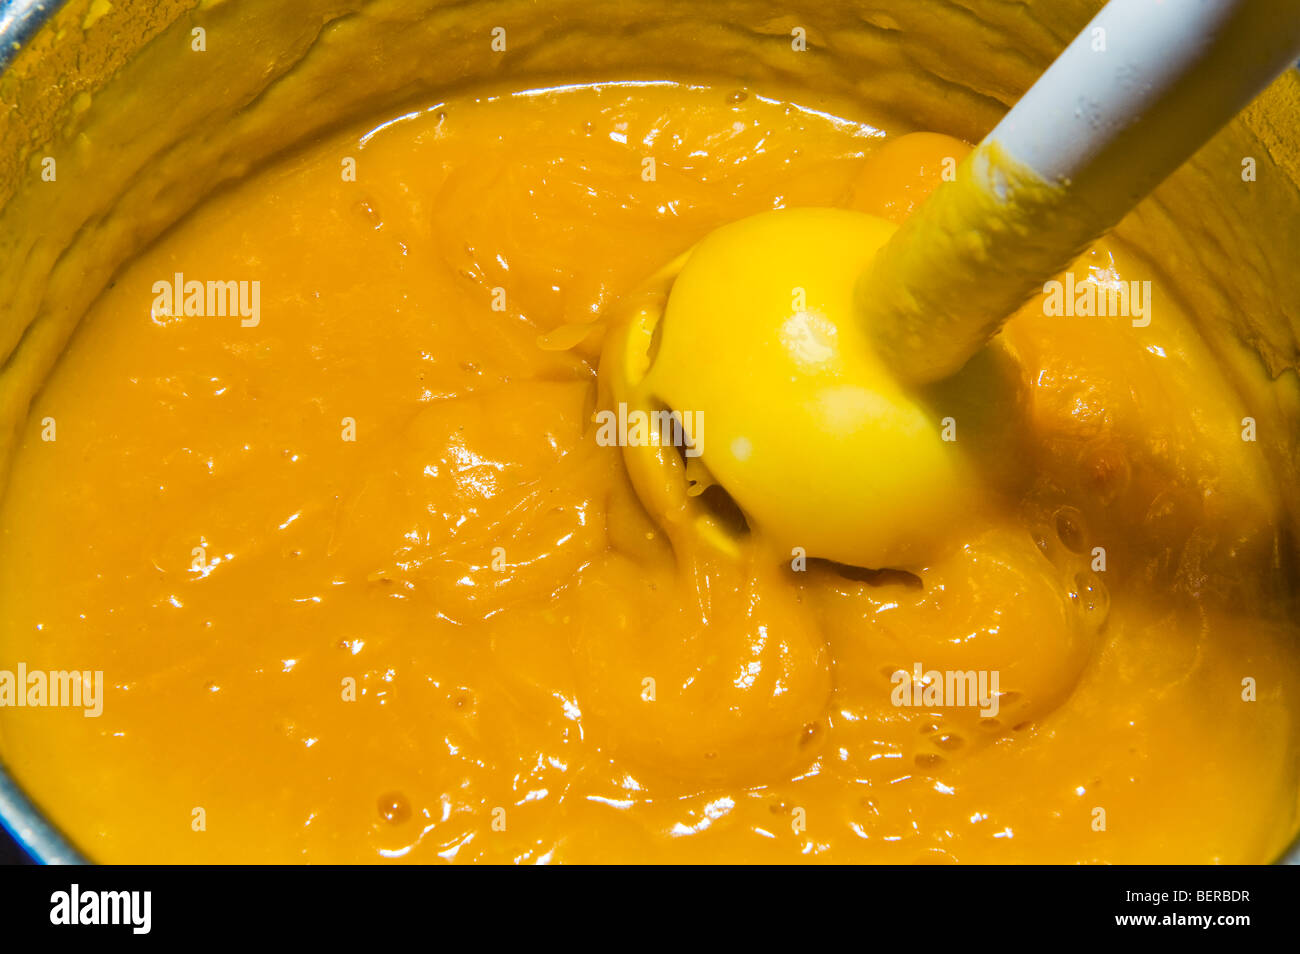 https://c8.alamy.com/comp/BERBDR/hot-make-pumpkin-soup-pot-mixer-puree-strain-pureeing-straining-kitchen-BERBDR.jpg